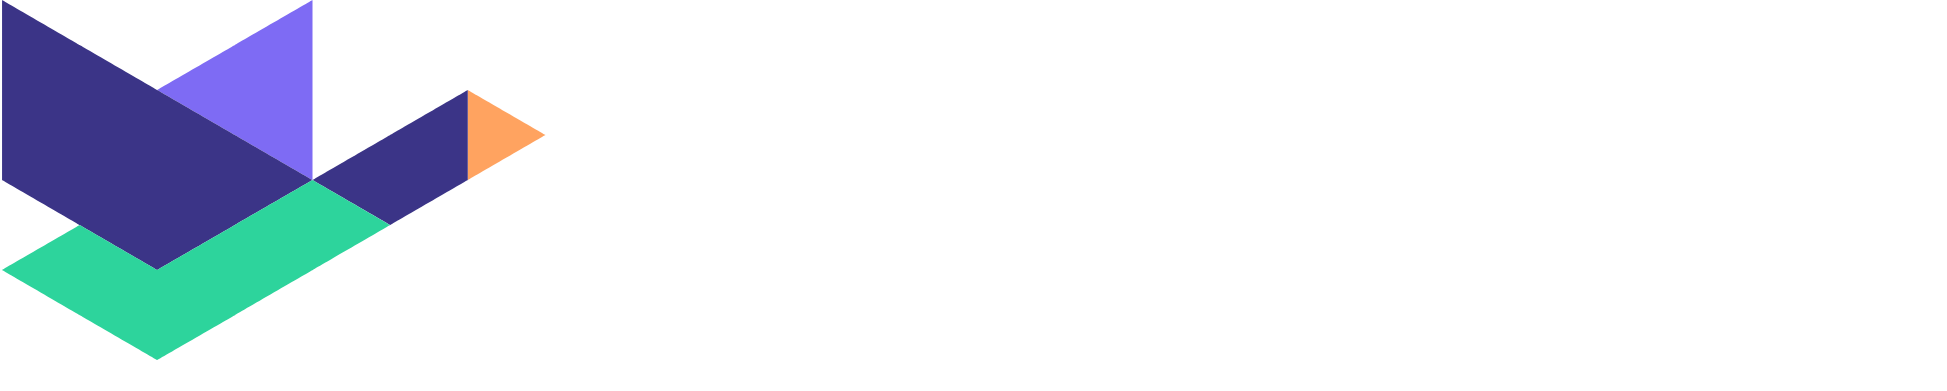 Duck Creek Technologies logo large for dark backgrounds (transparent PNG)